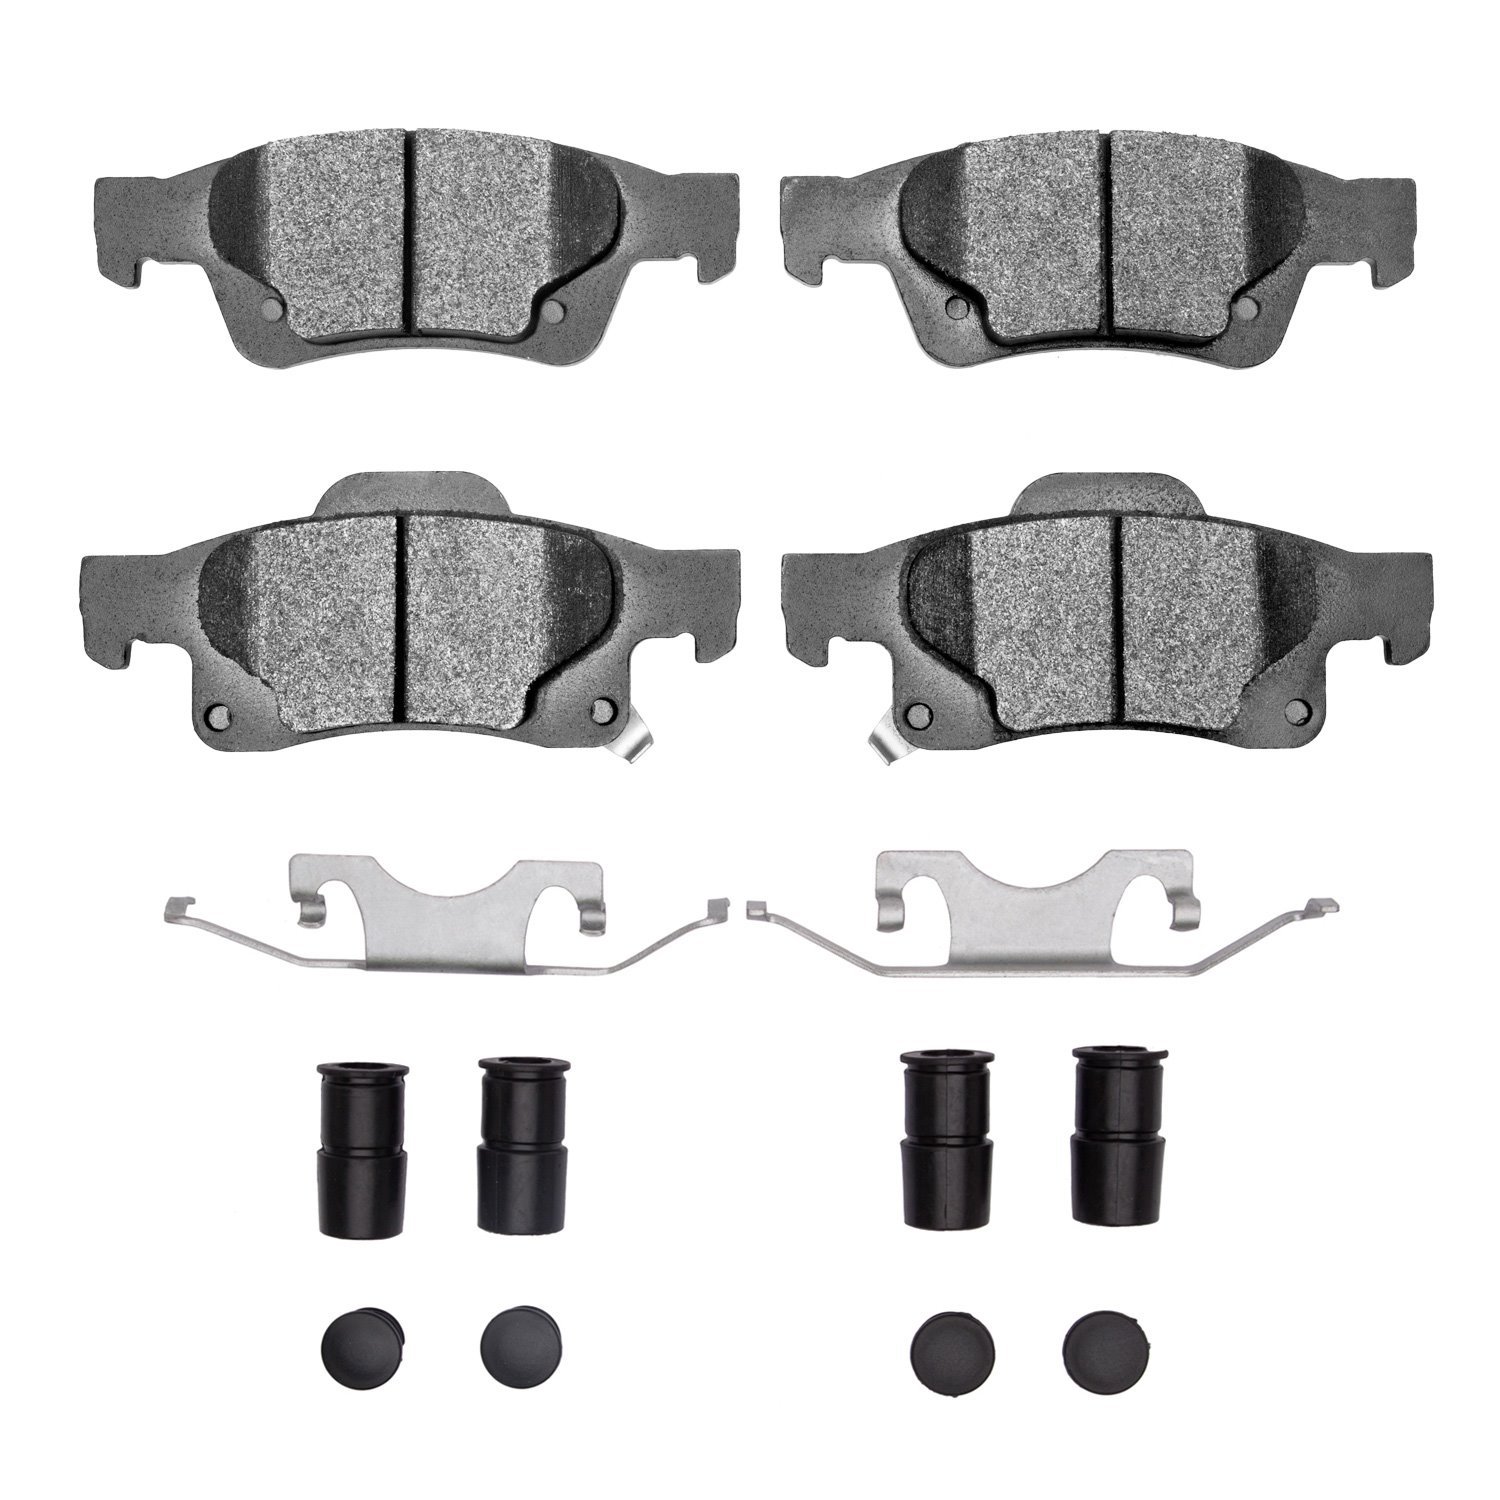 1310-1498-01 3000-Series Ceramic Brake Pads & Hardware Kit, Fits Select Mopar, Position: Rear